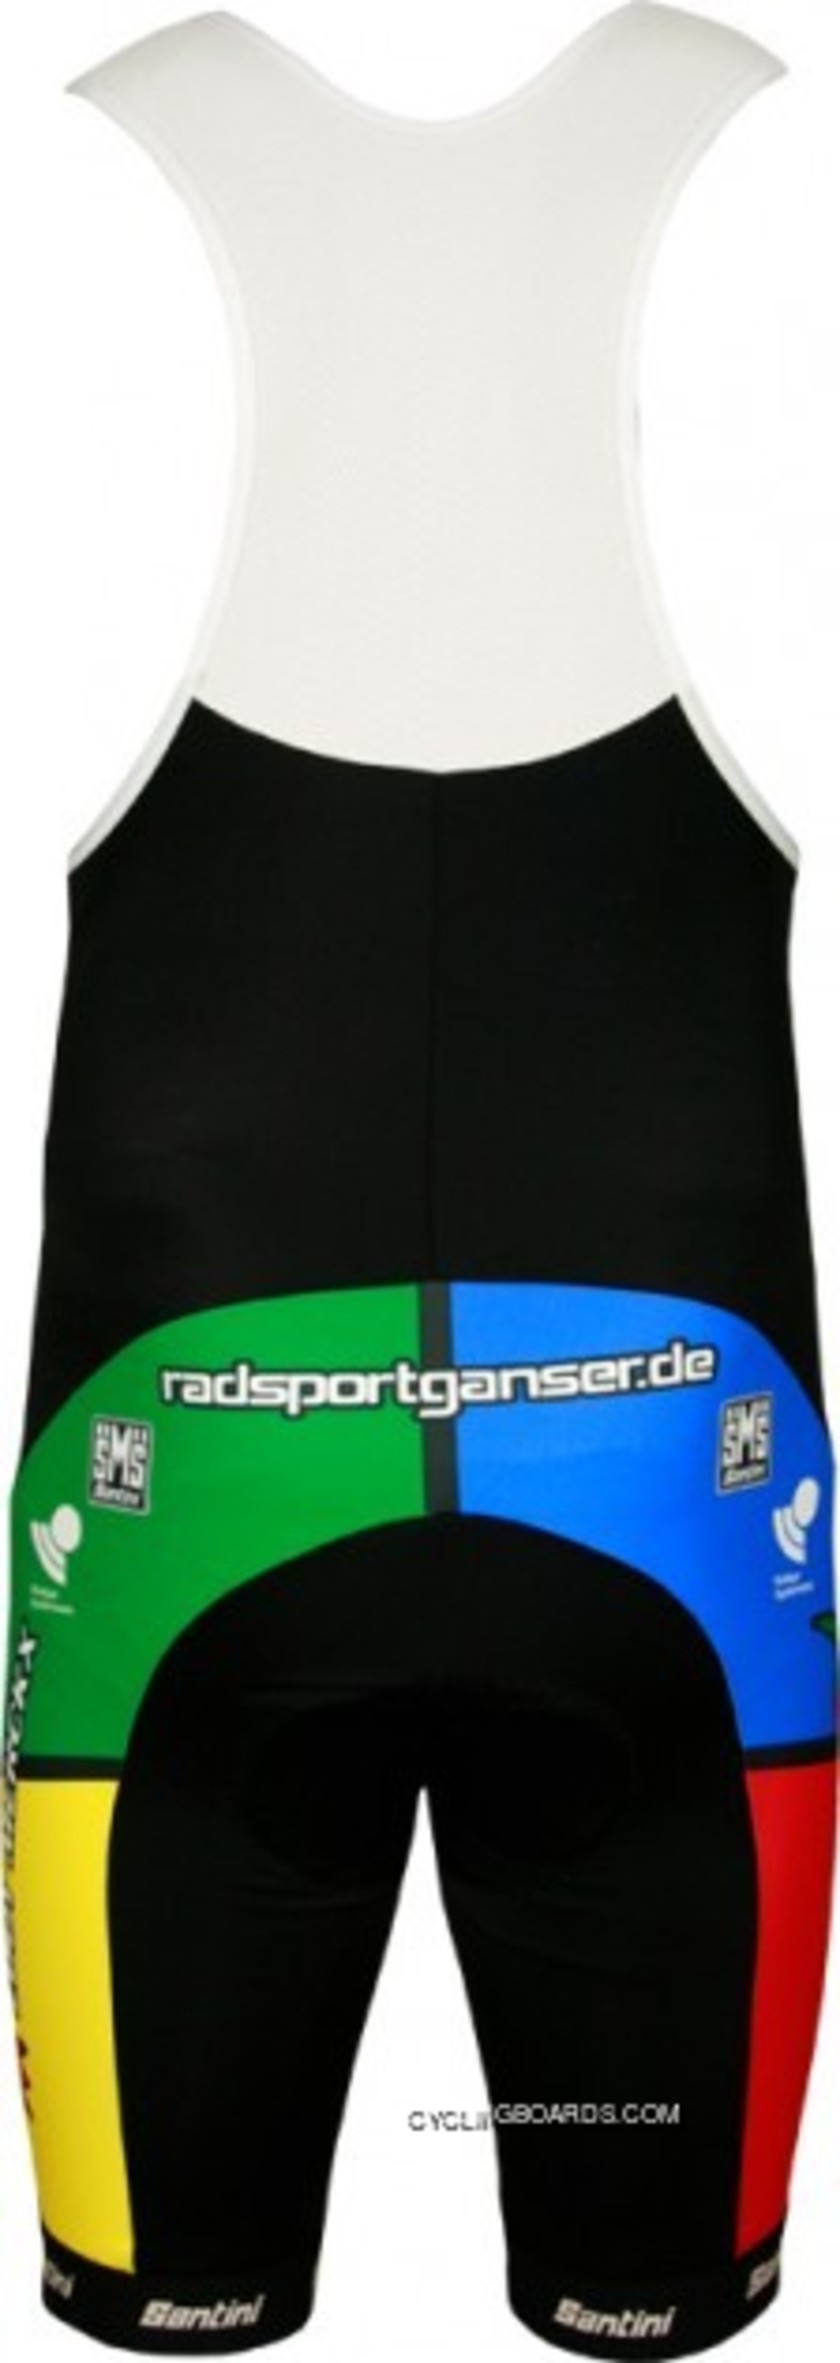 Eddy Merckx Indeland 2012 Radsport-Profi-Team - Bib Shorts Tj-121-1150 New Release